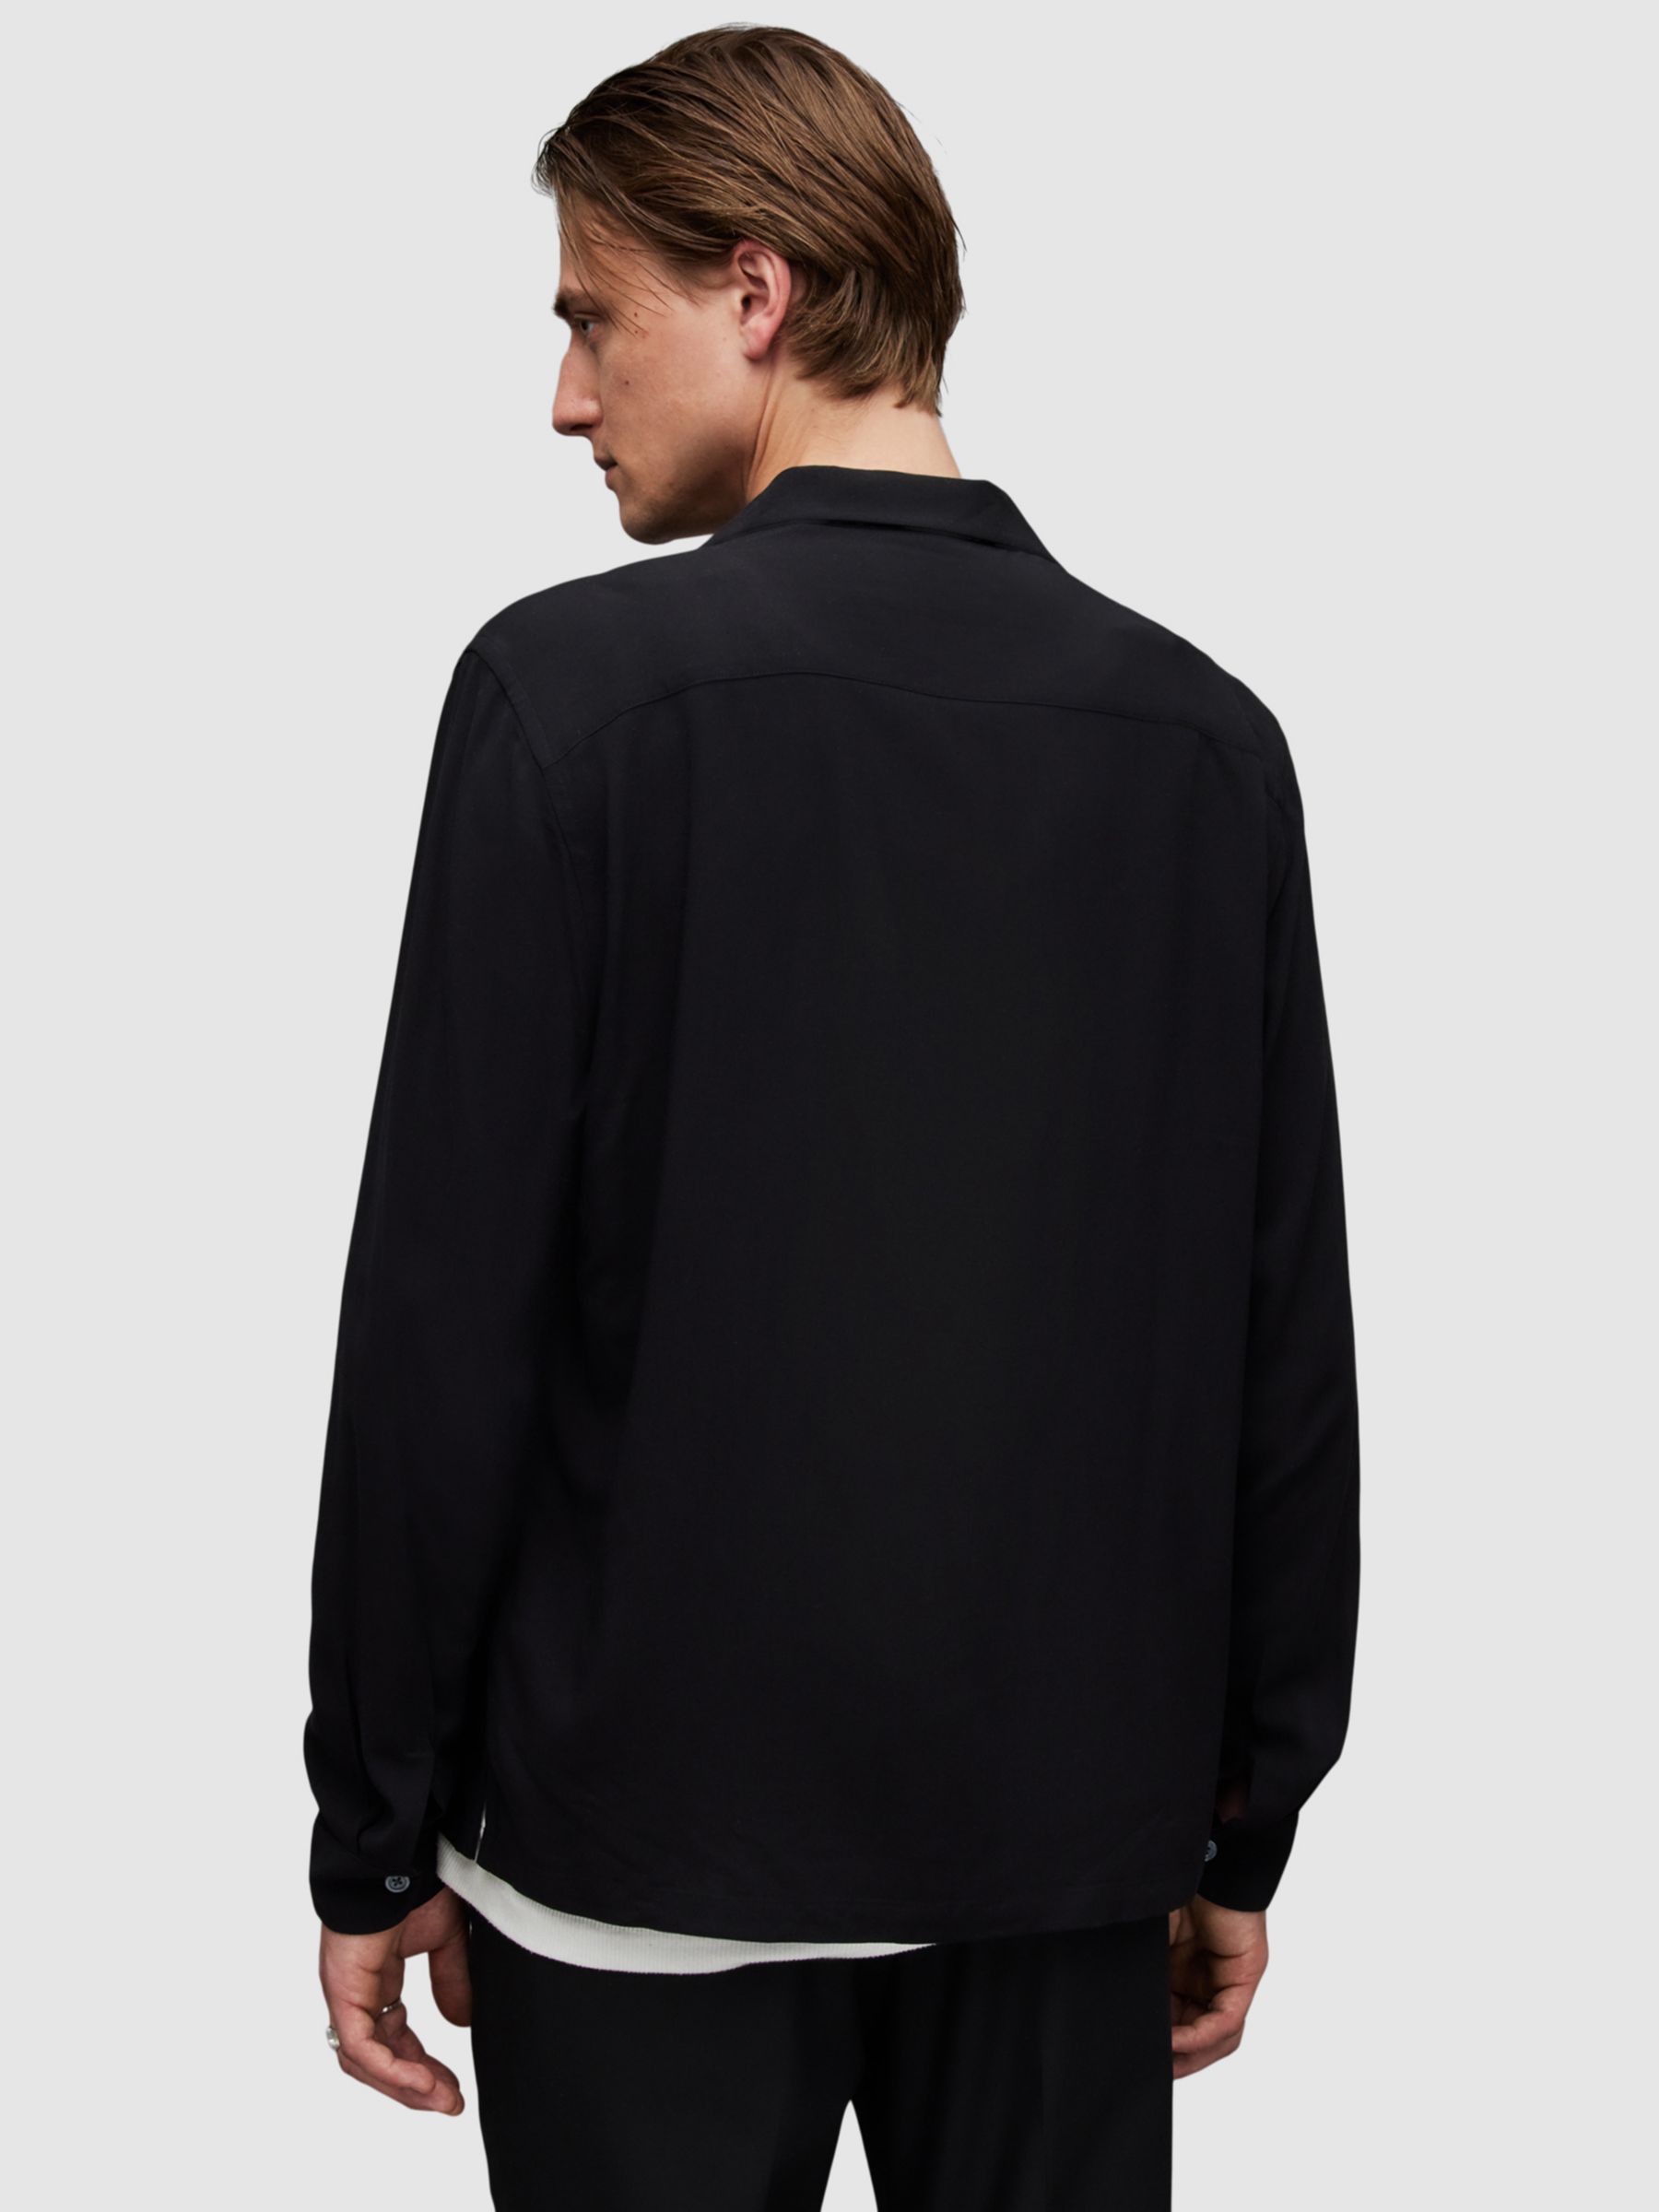 AllSaint Venice Long Sleeve Shirt, Black, L